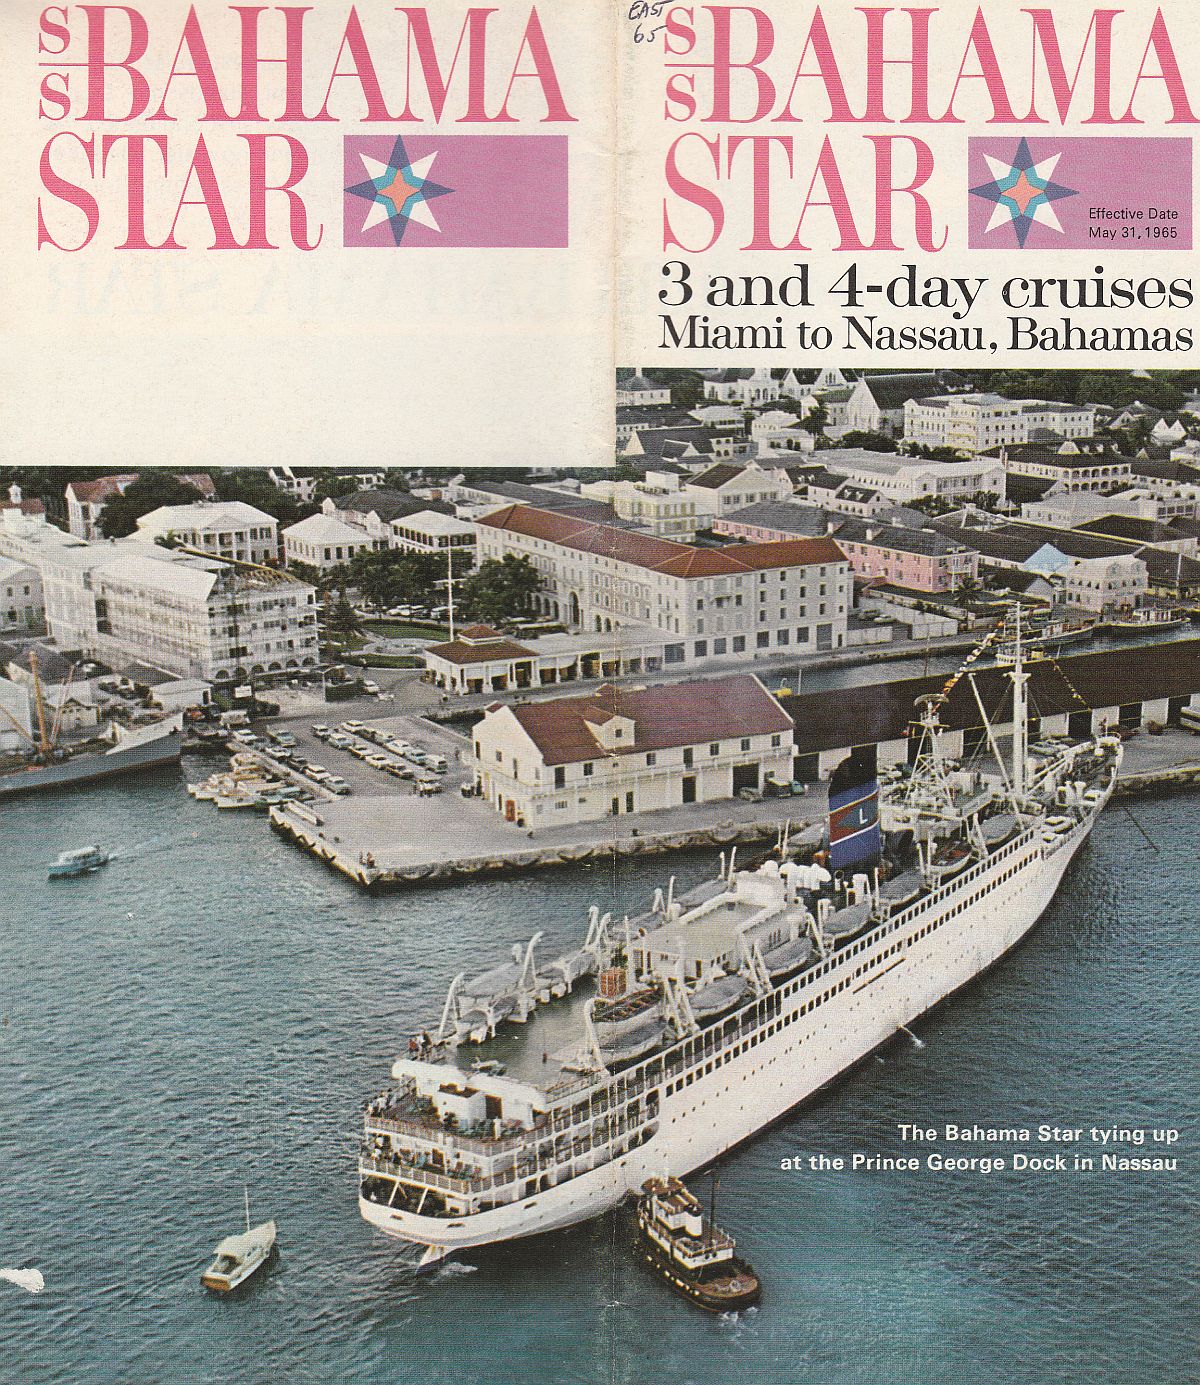 ss Bahama Star Brochure effective May 31, 1965: 3 and 4-day cruises Miami to Nassau, Bahamas